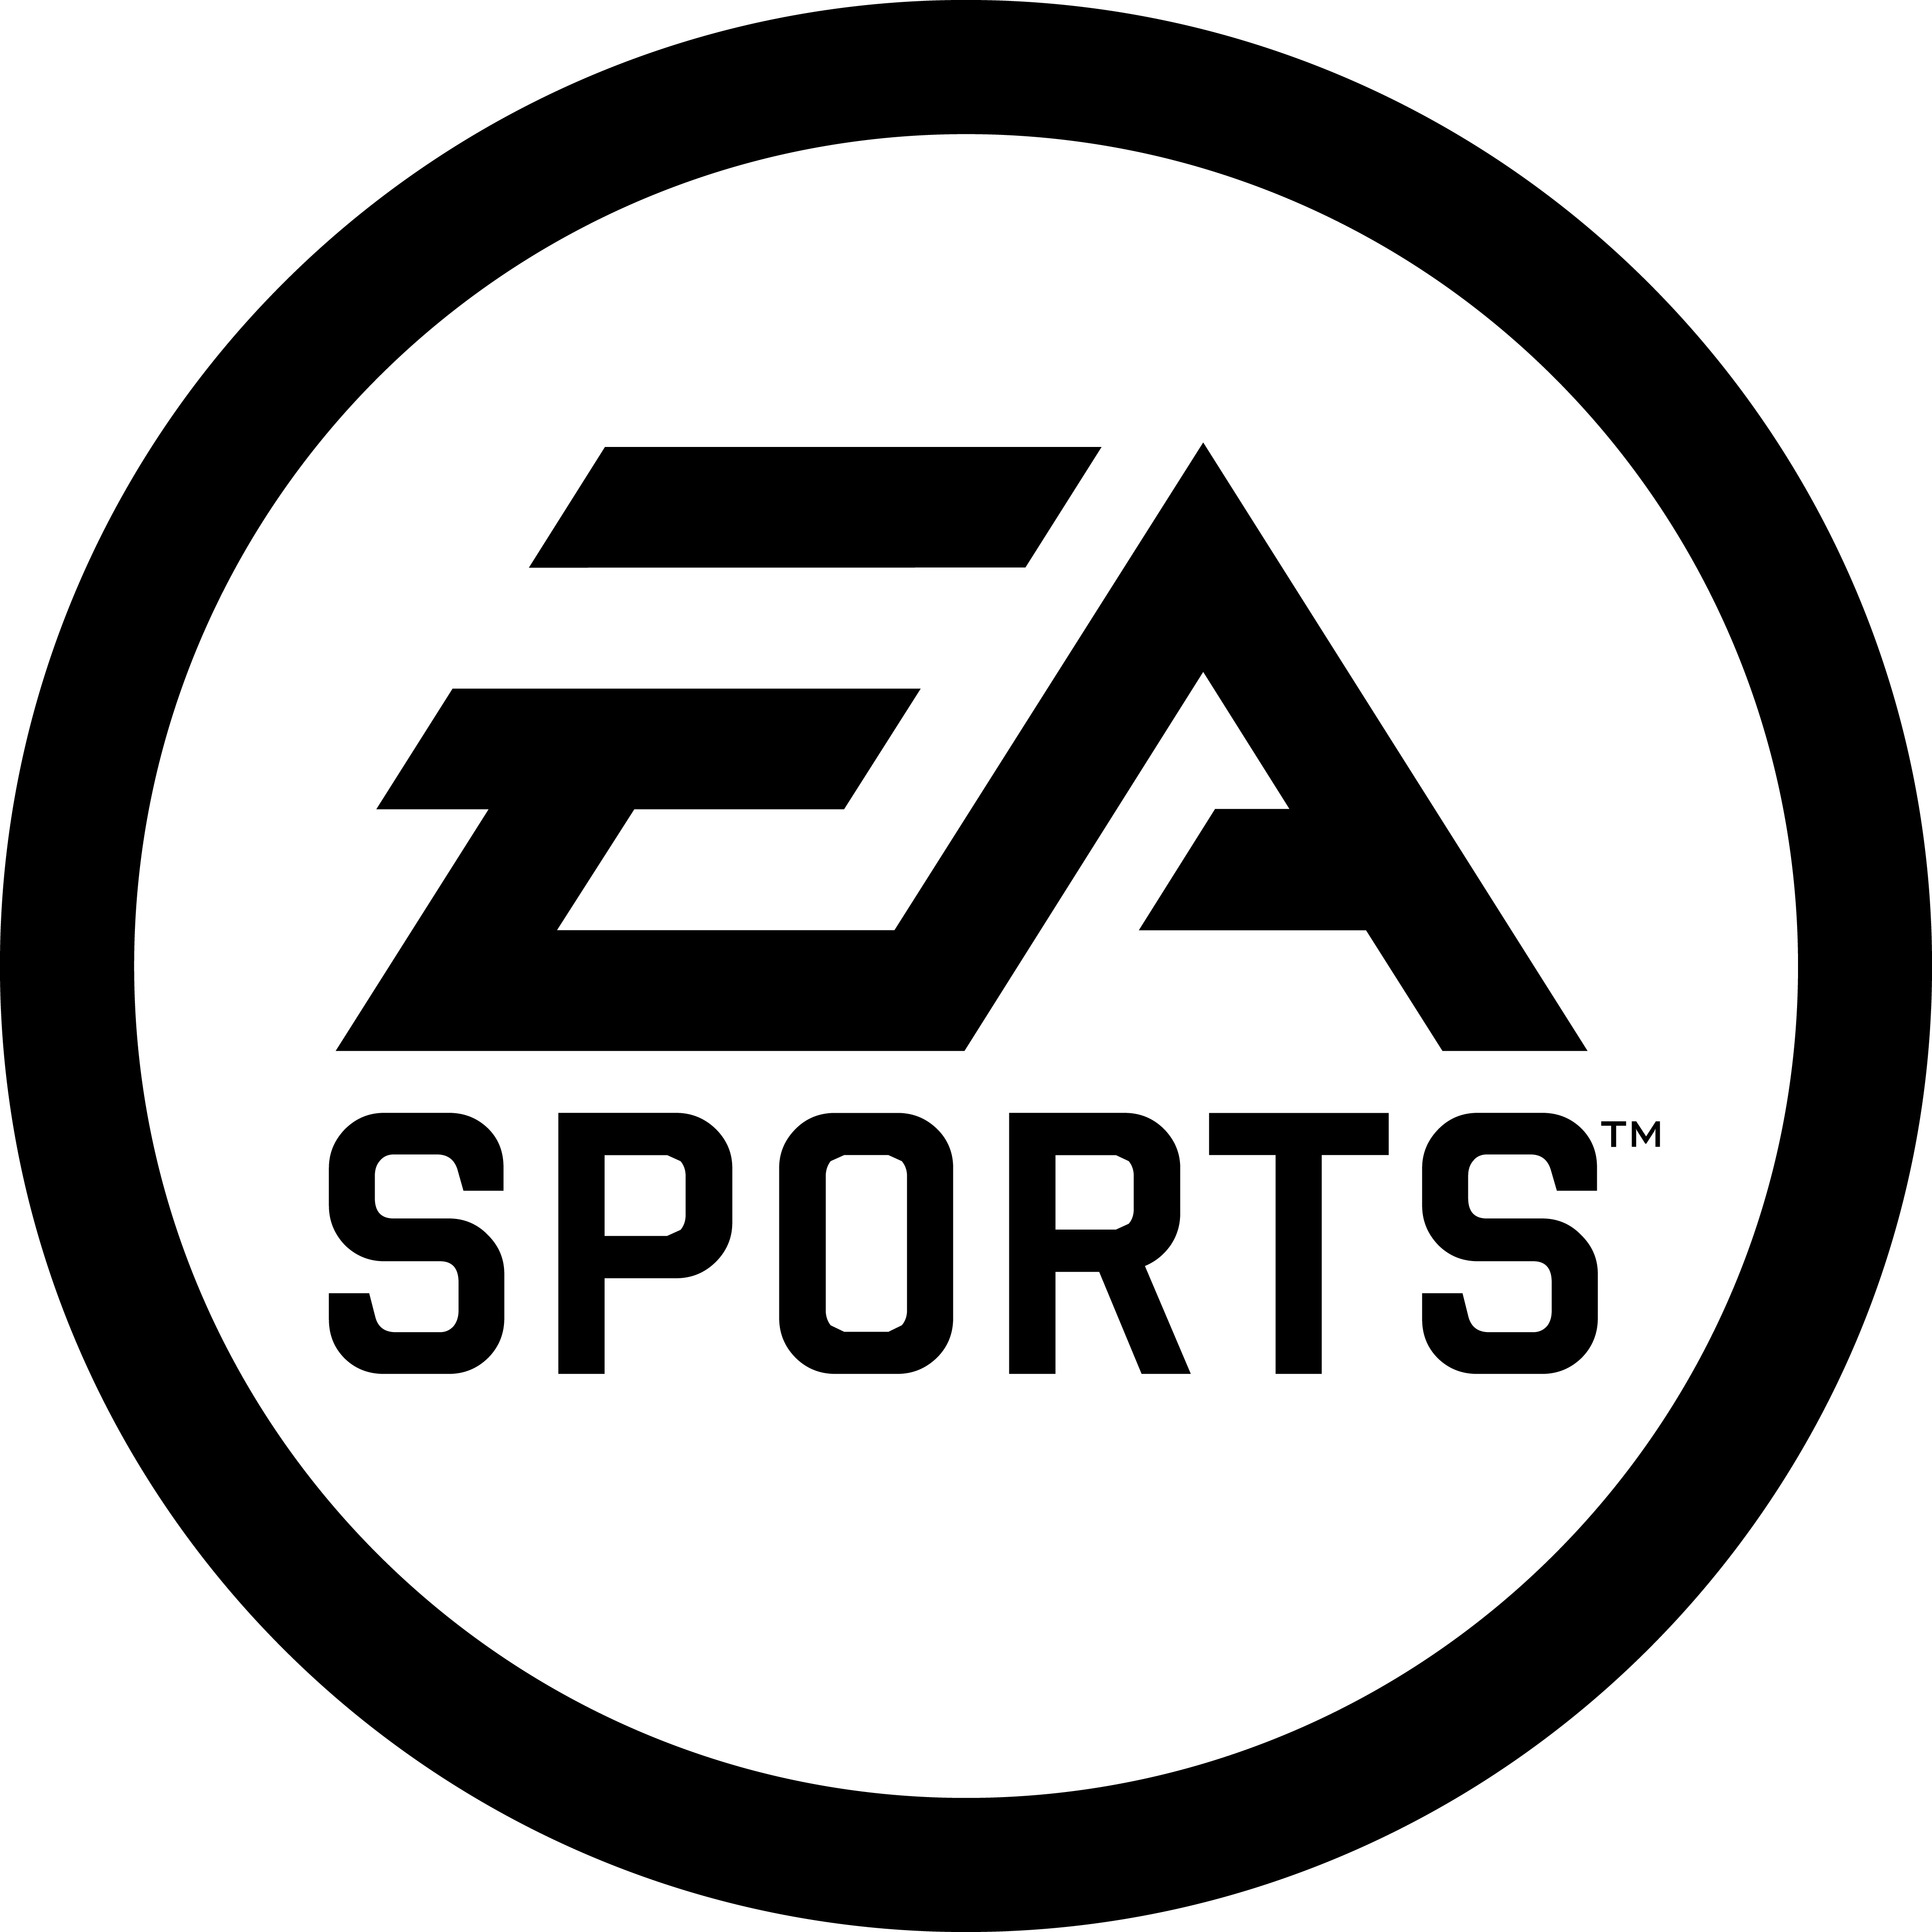 EA_Sports_monochrome_logo1